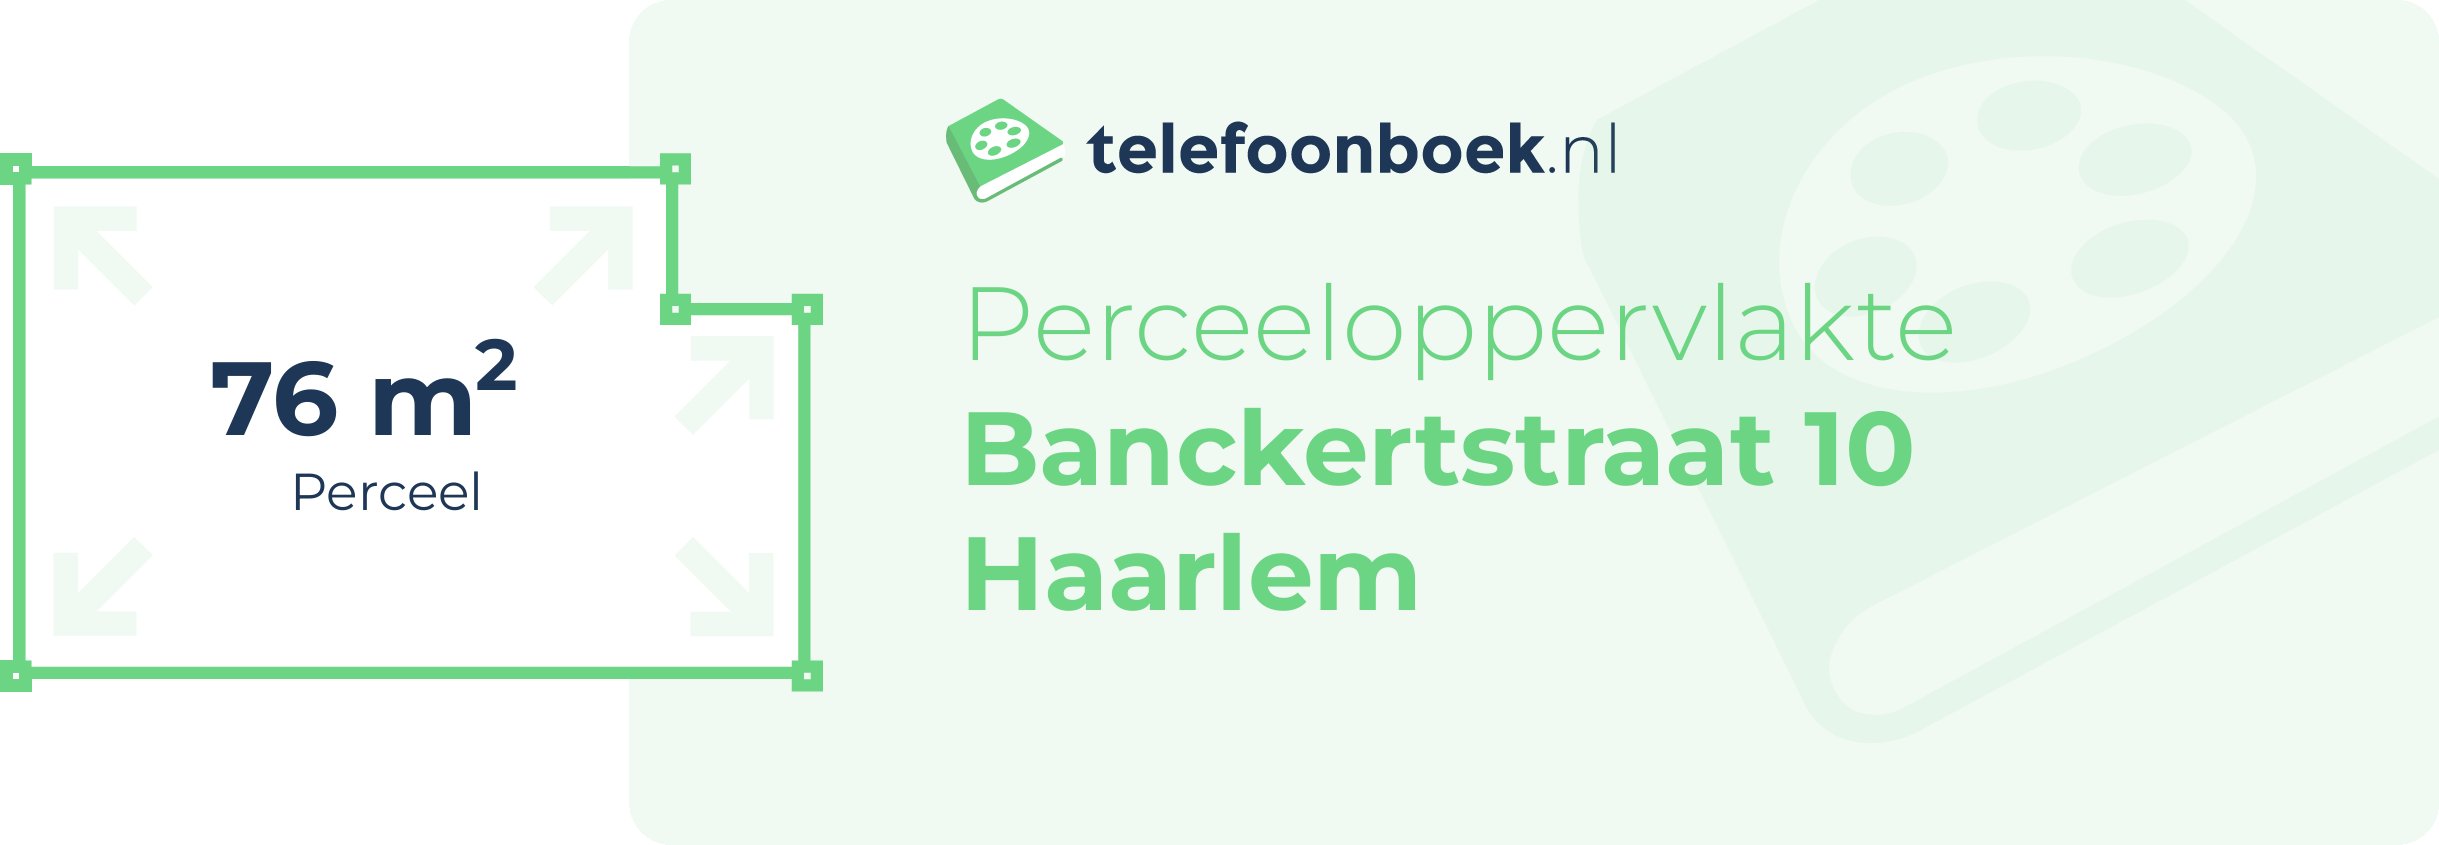 Perceeloppervlakte Banckertstraat 10 Haarlem